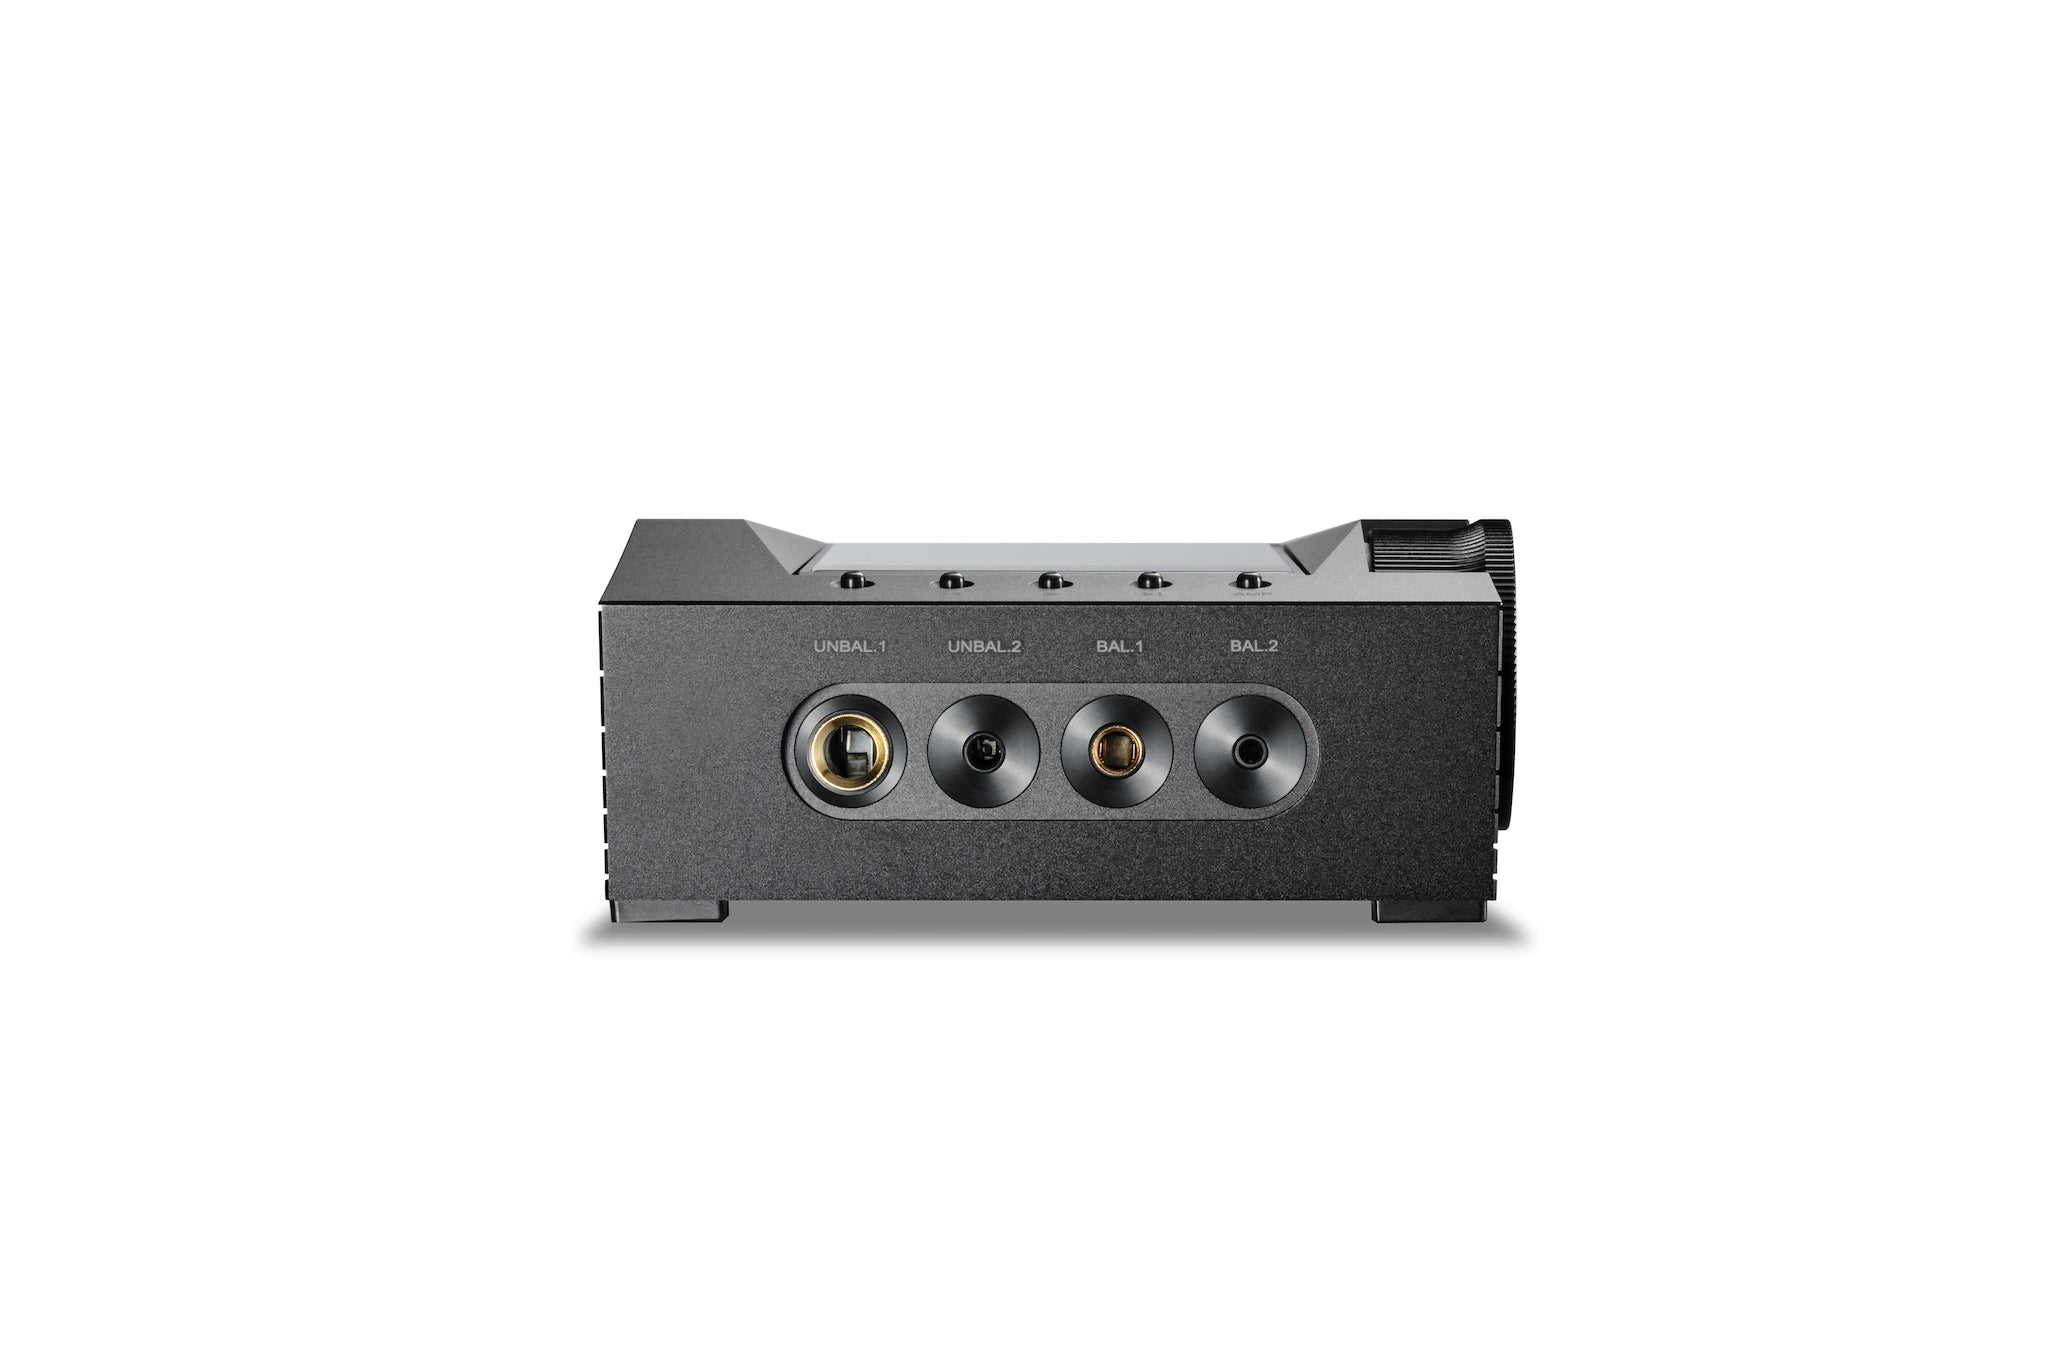 Astellu0026Kern Acro CA1000T | Transportable Digital Audio Player